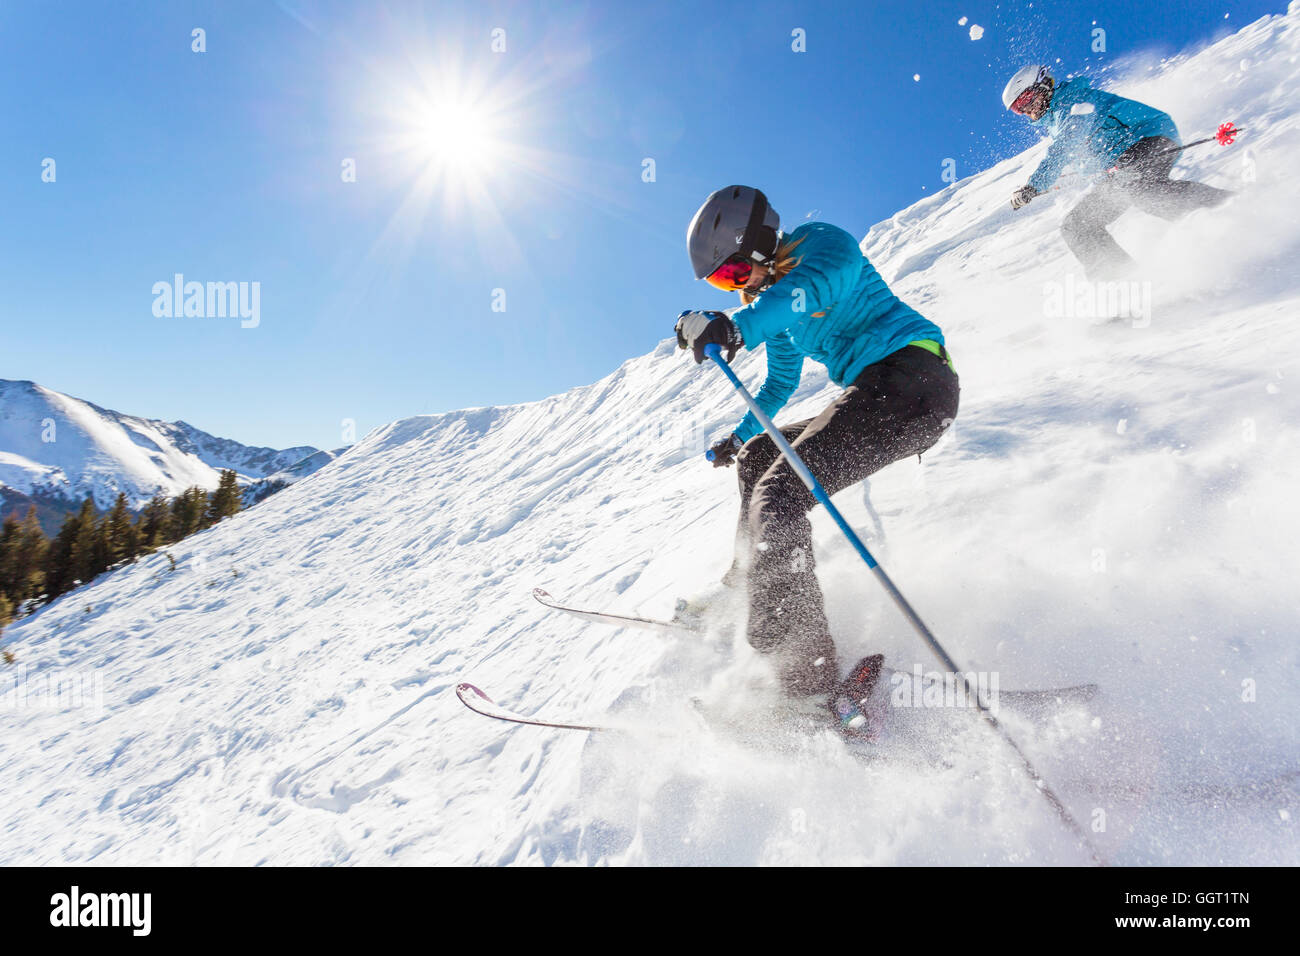 Couple skiing on snowy mountain slope Stock Photo